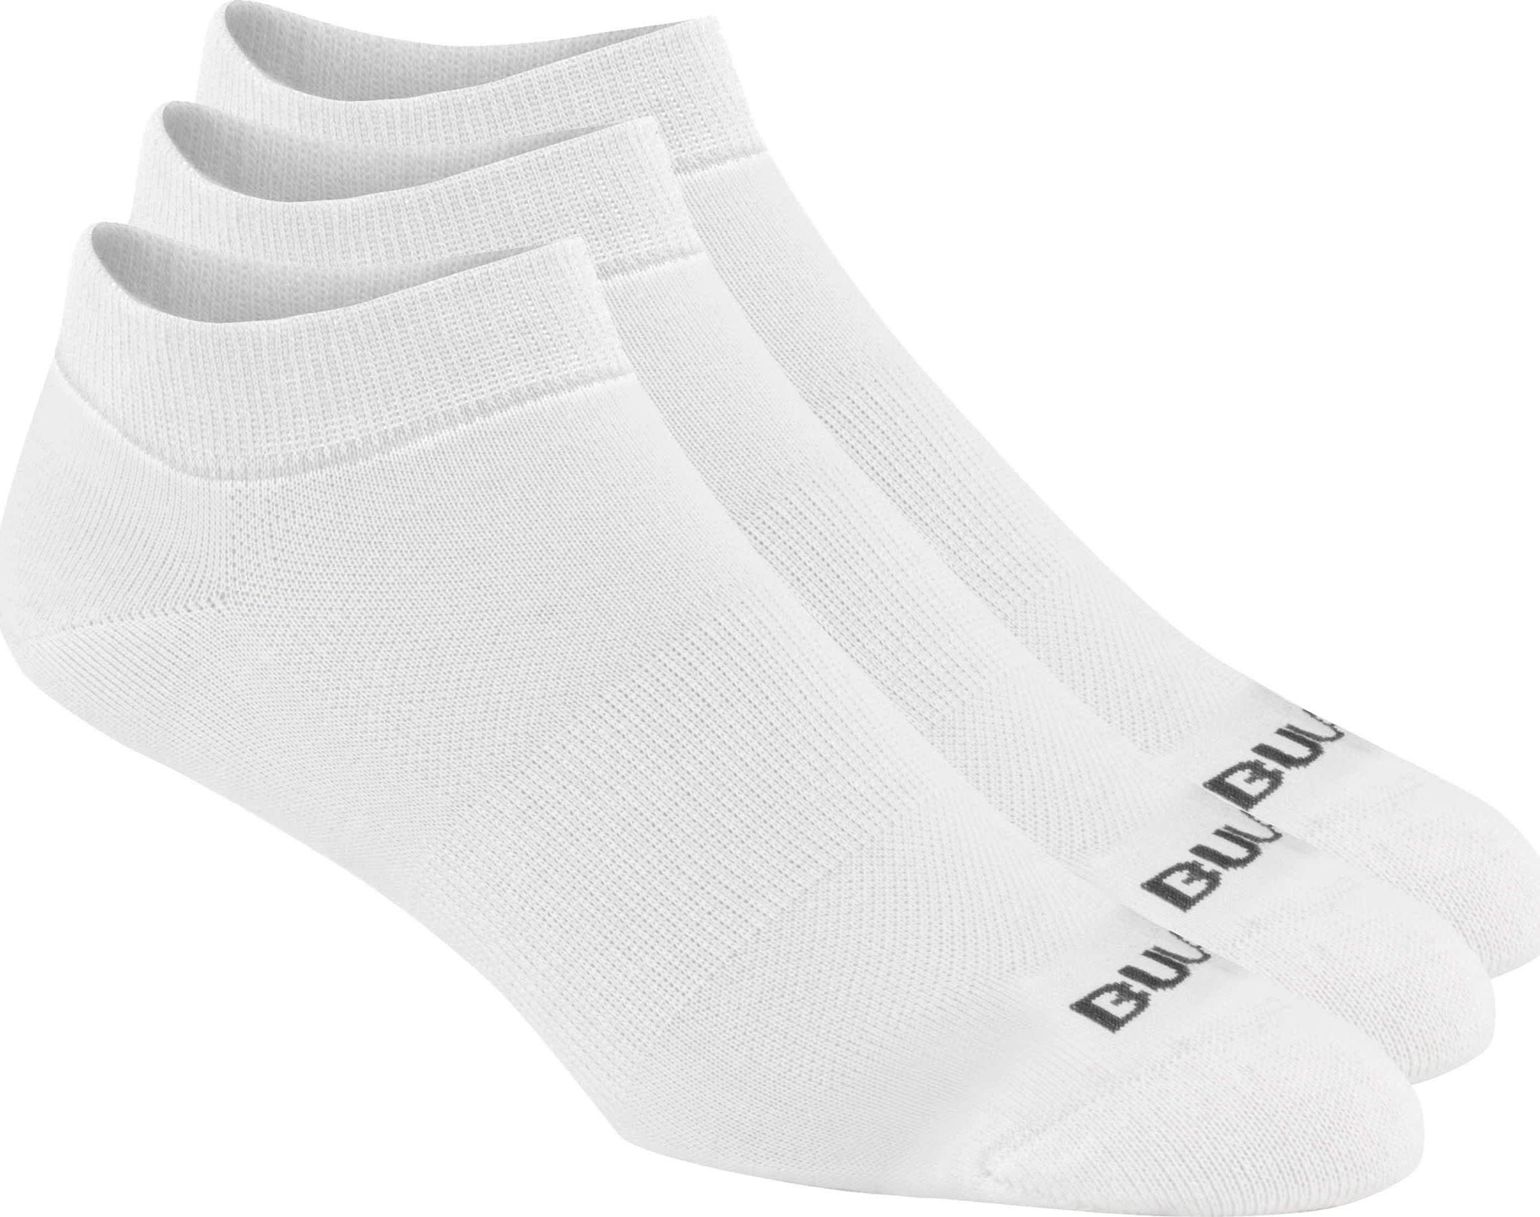 Bula Men's Safe Socks 3pk White